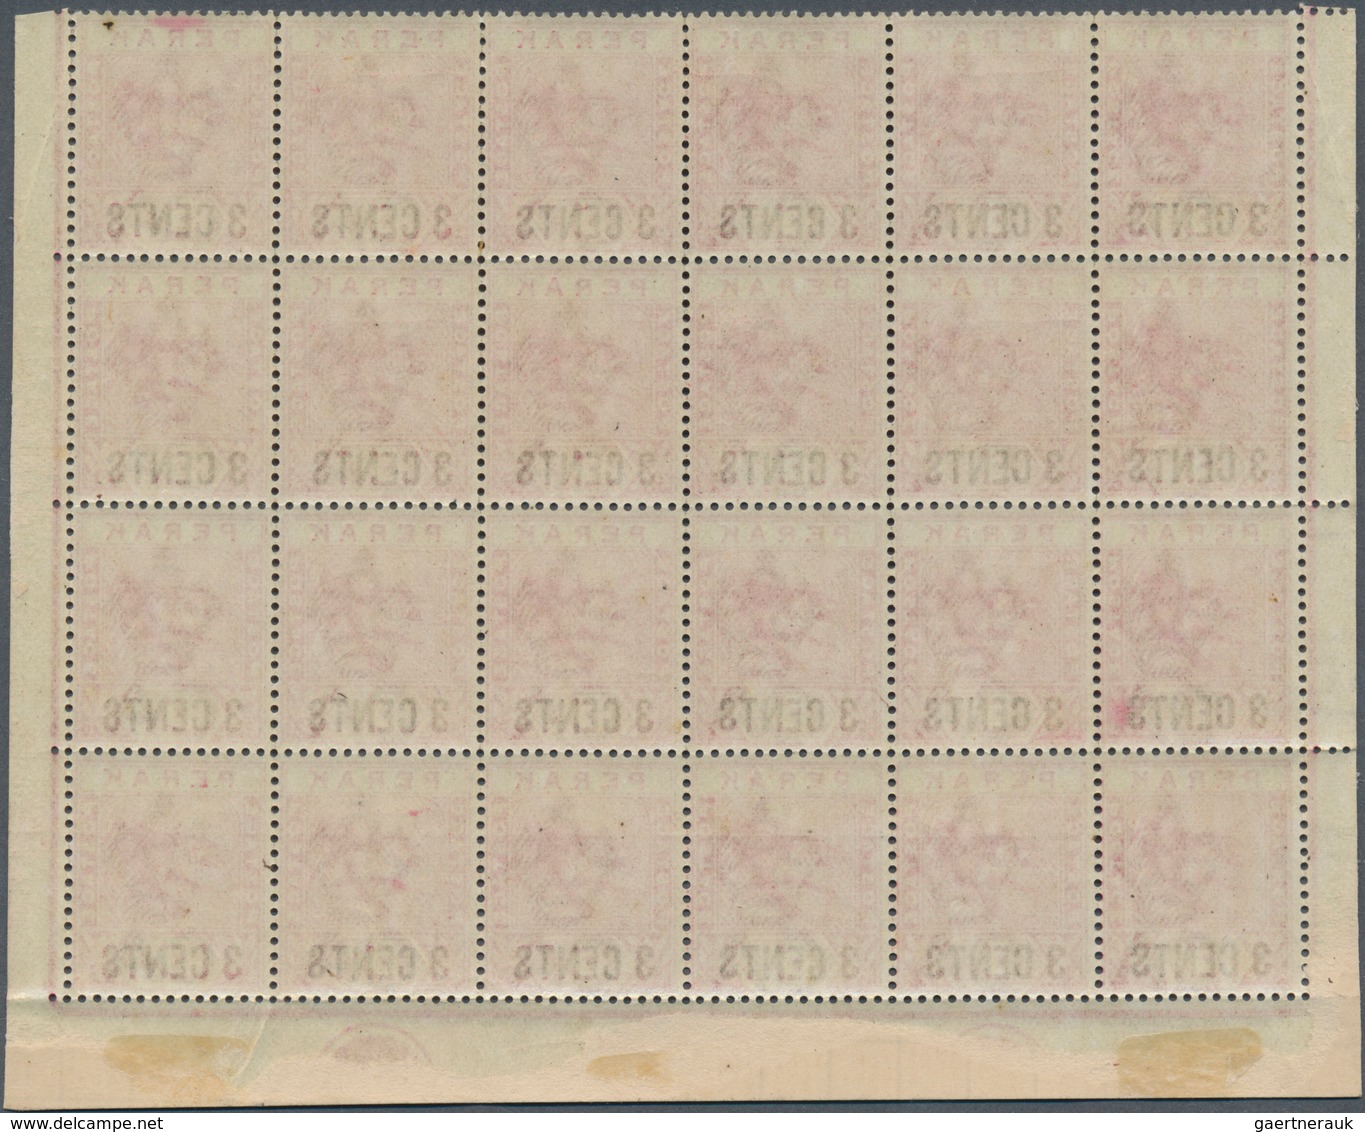 Malaiische Staaten - Perak: 1895, 3c. On 5c. Rose, Bright Colour, Marginal Block Of 24 From Lower Pa - Perak